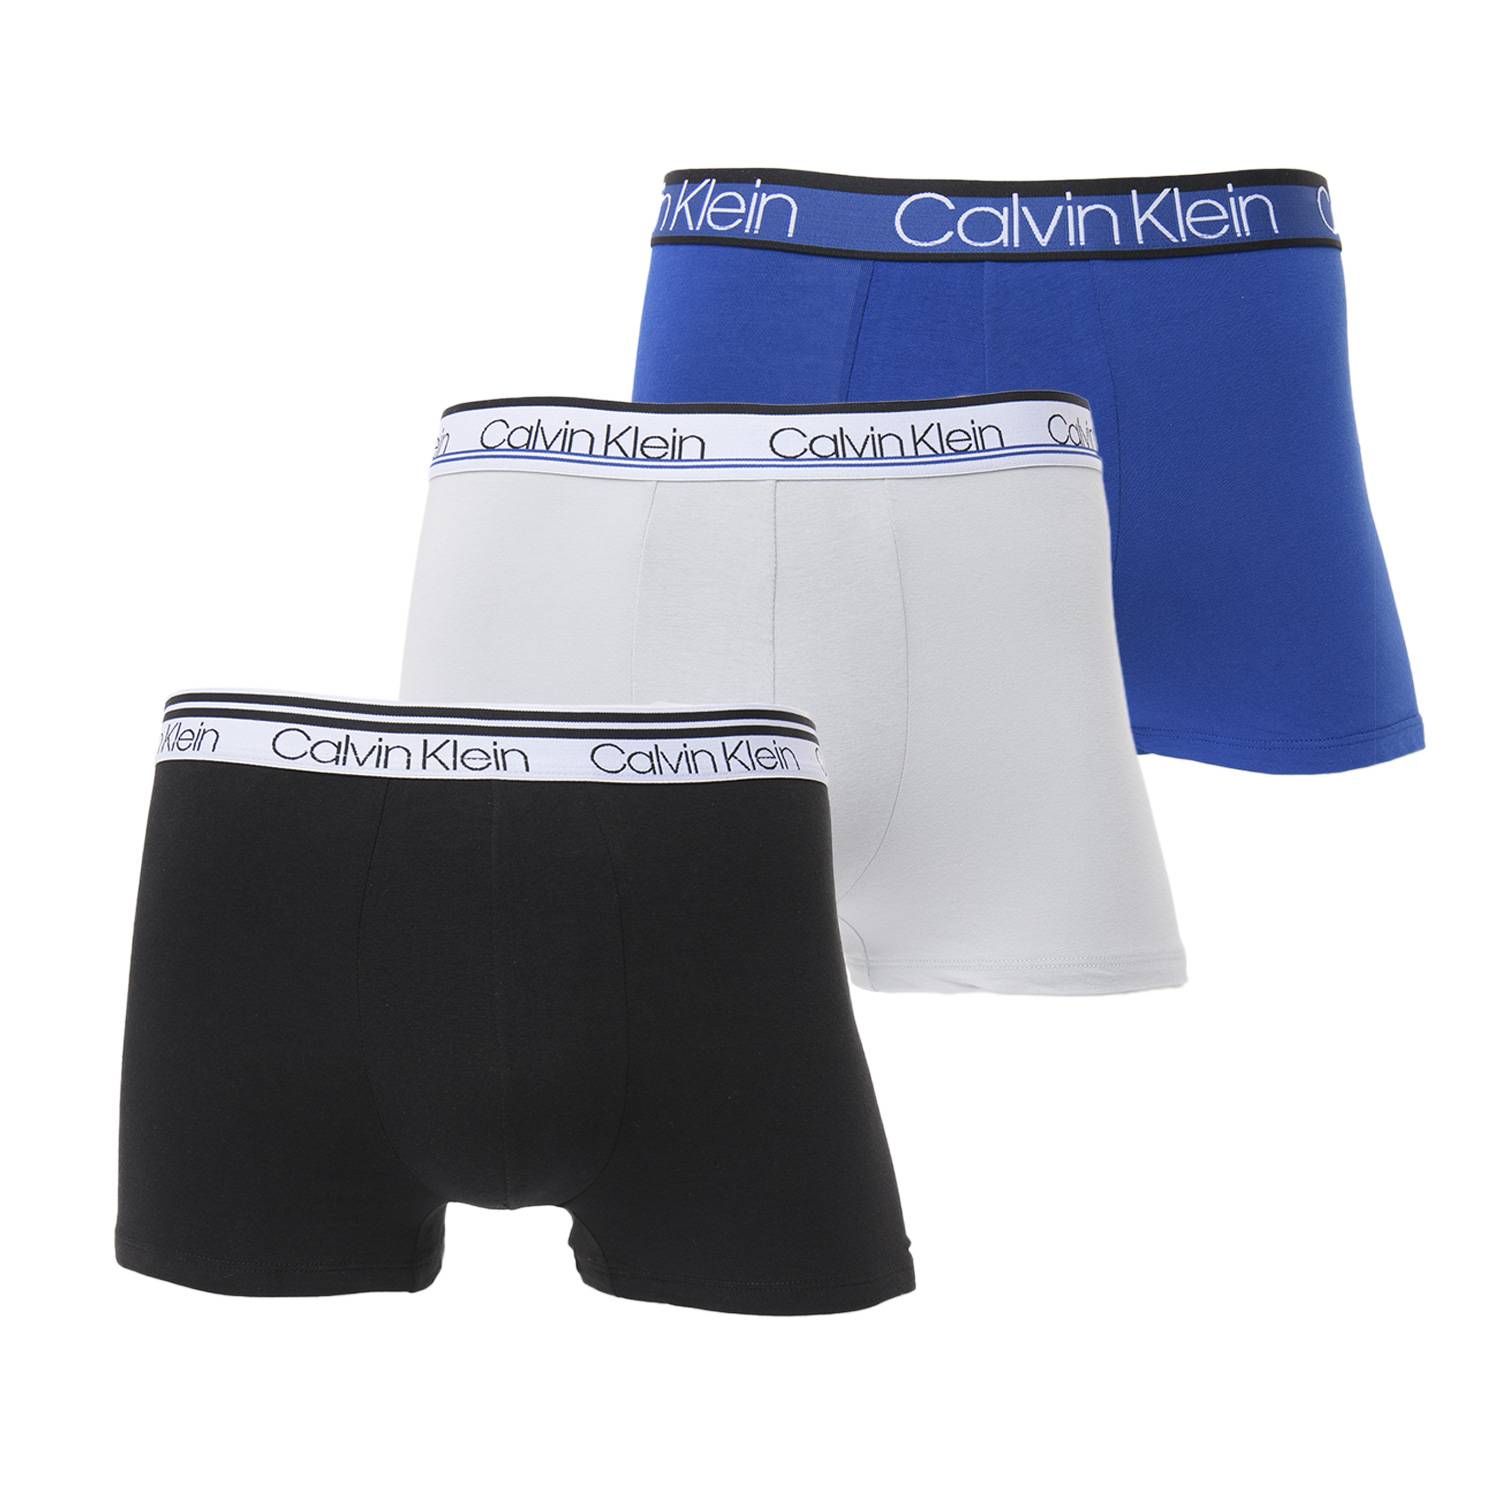 Nuevo en caja paquete de dos boxers para hombre Calvin Klein algodón boxer  100 % algodón